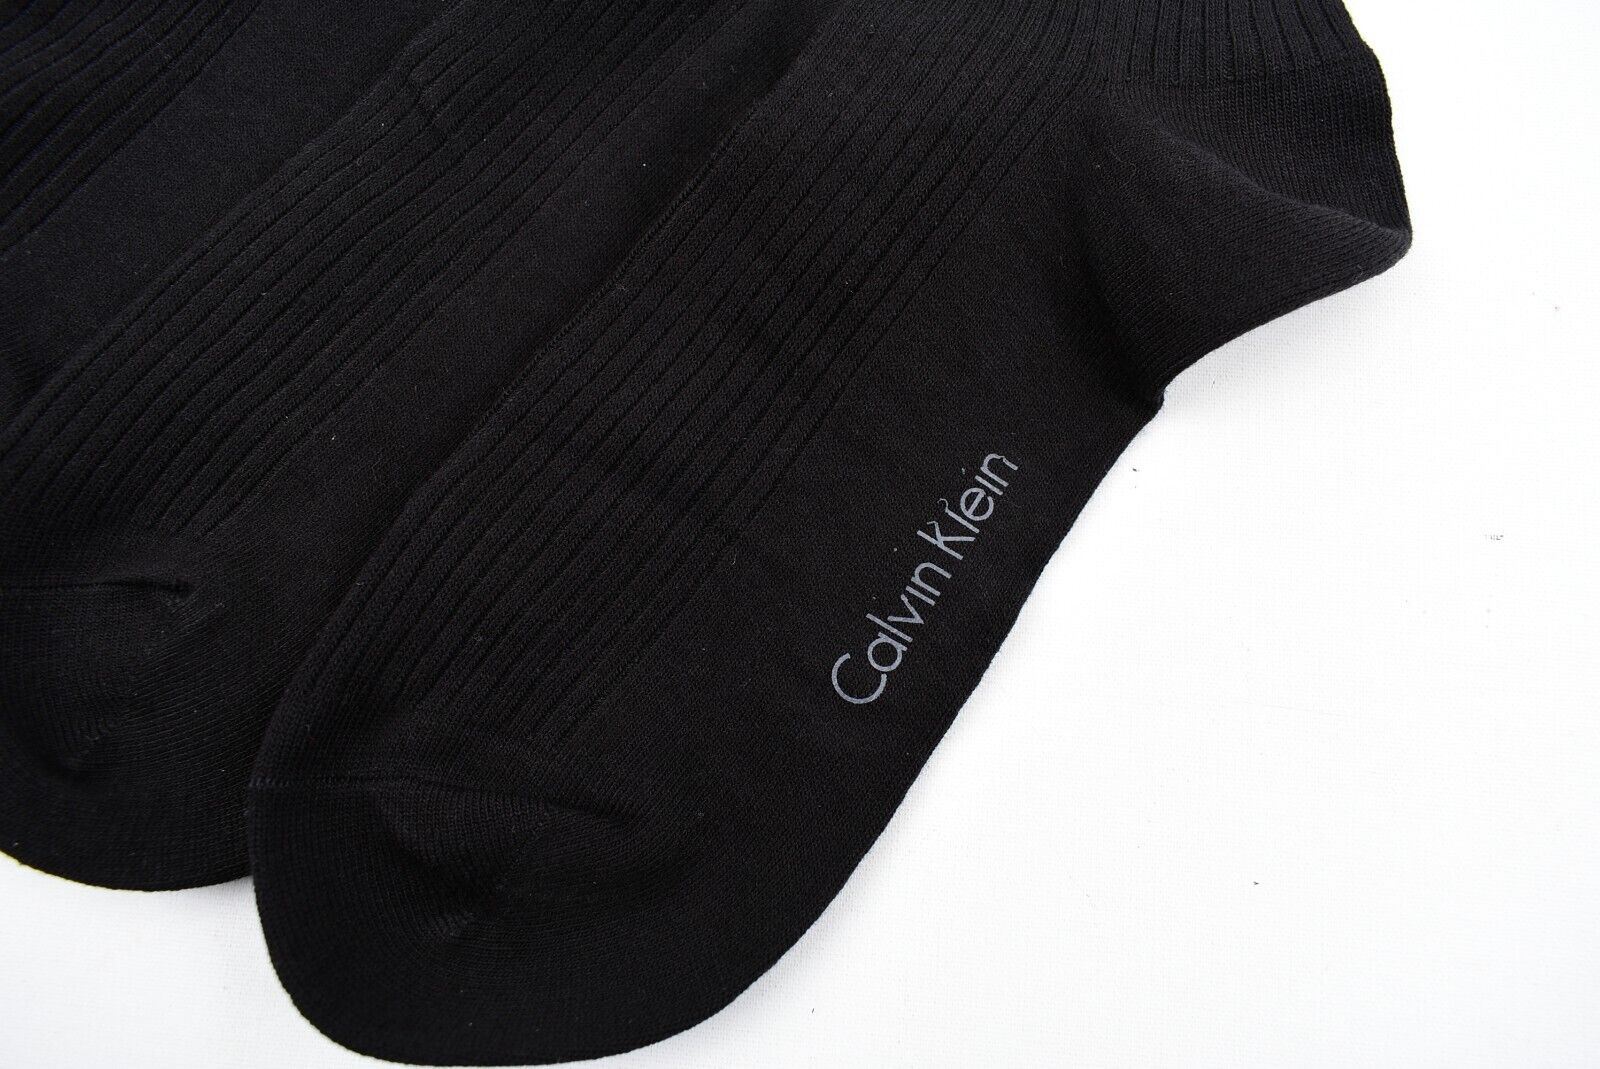 CALVIN KLEIN Mens 4-pack Ribbed Crew Socks, Black, Gift Boxed, size UK 6.5-11